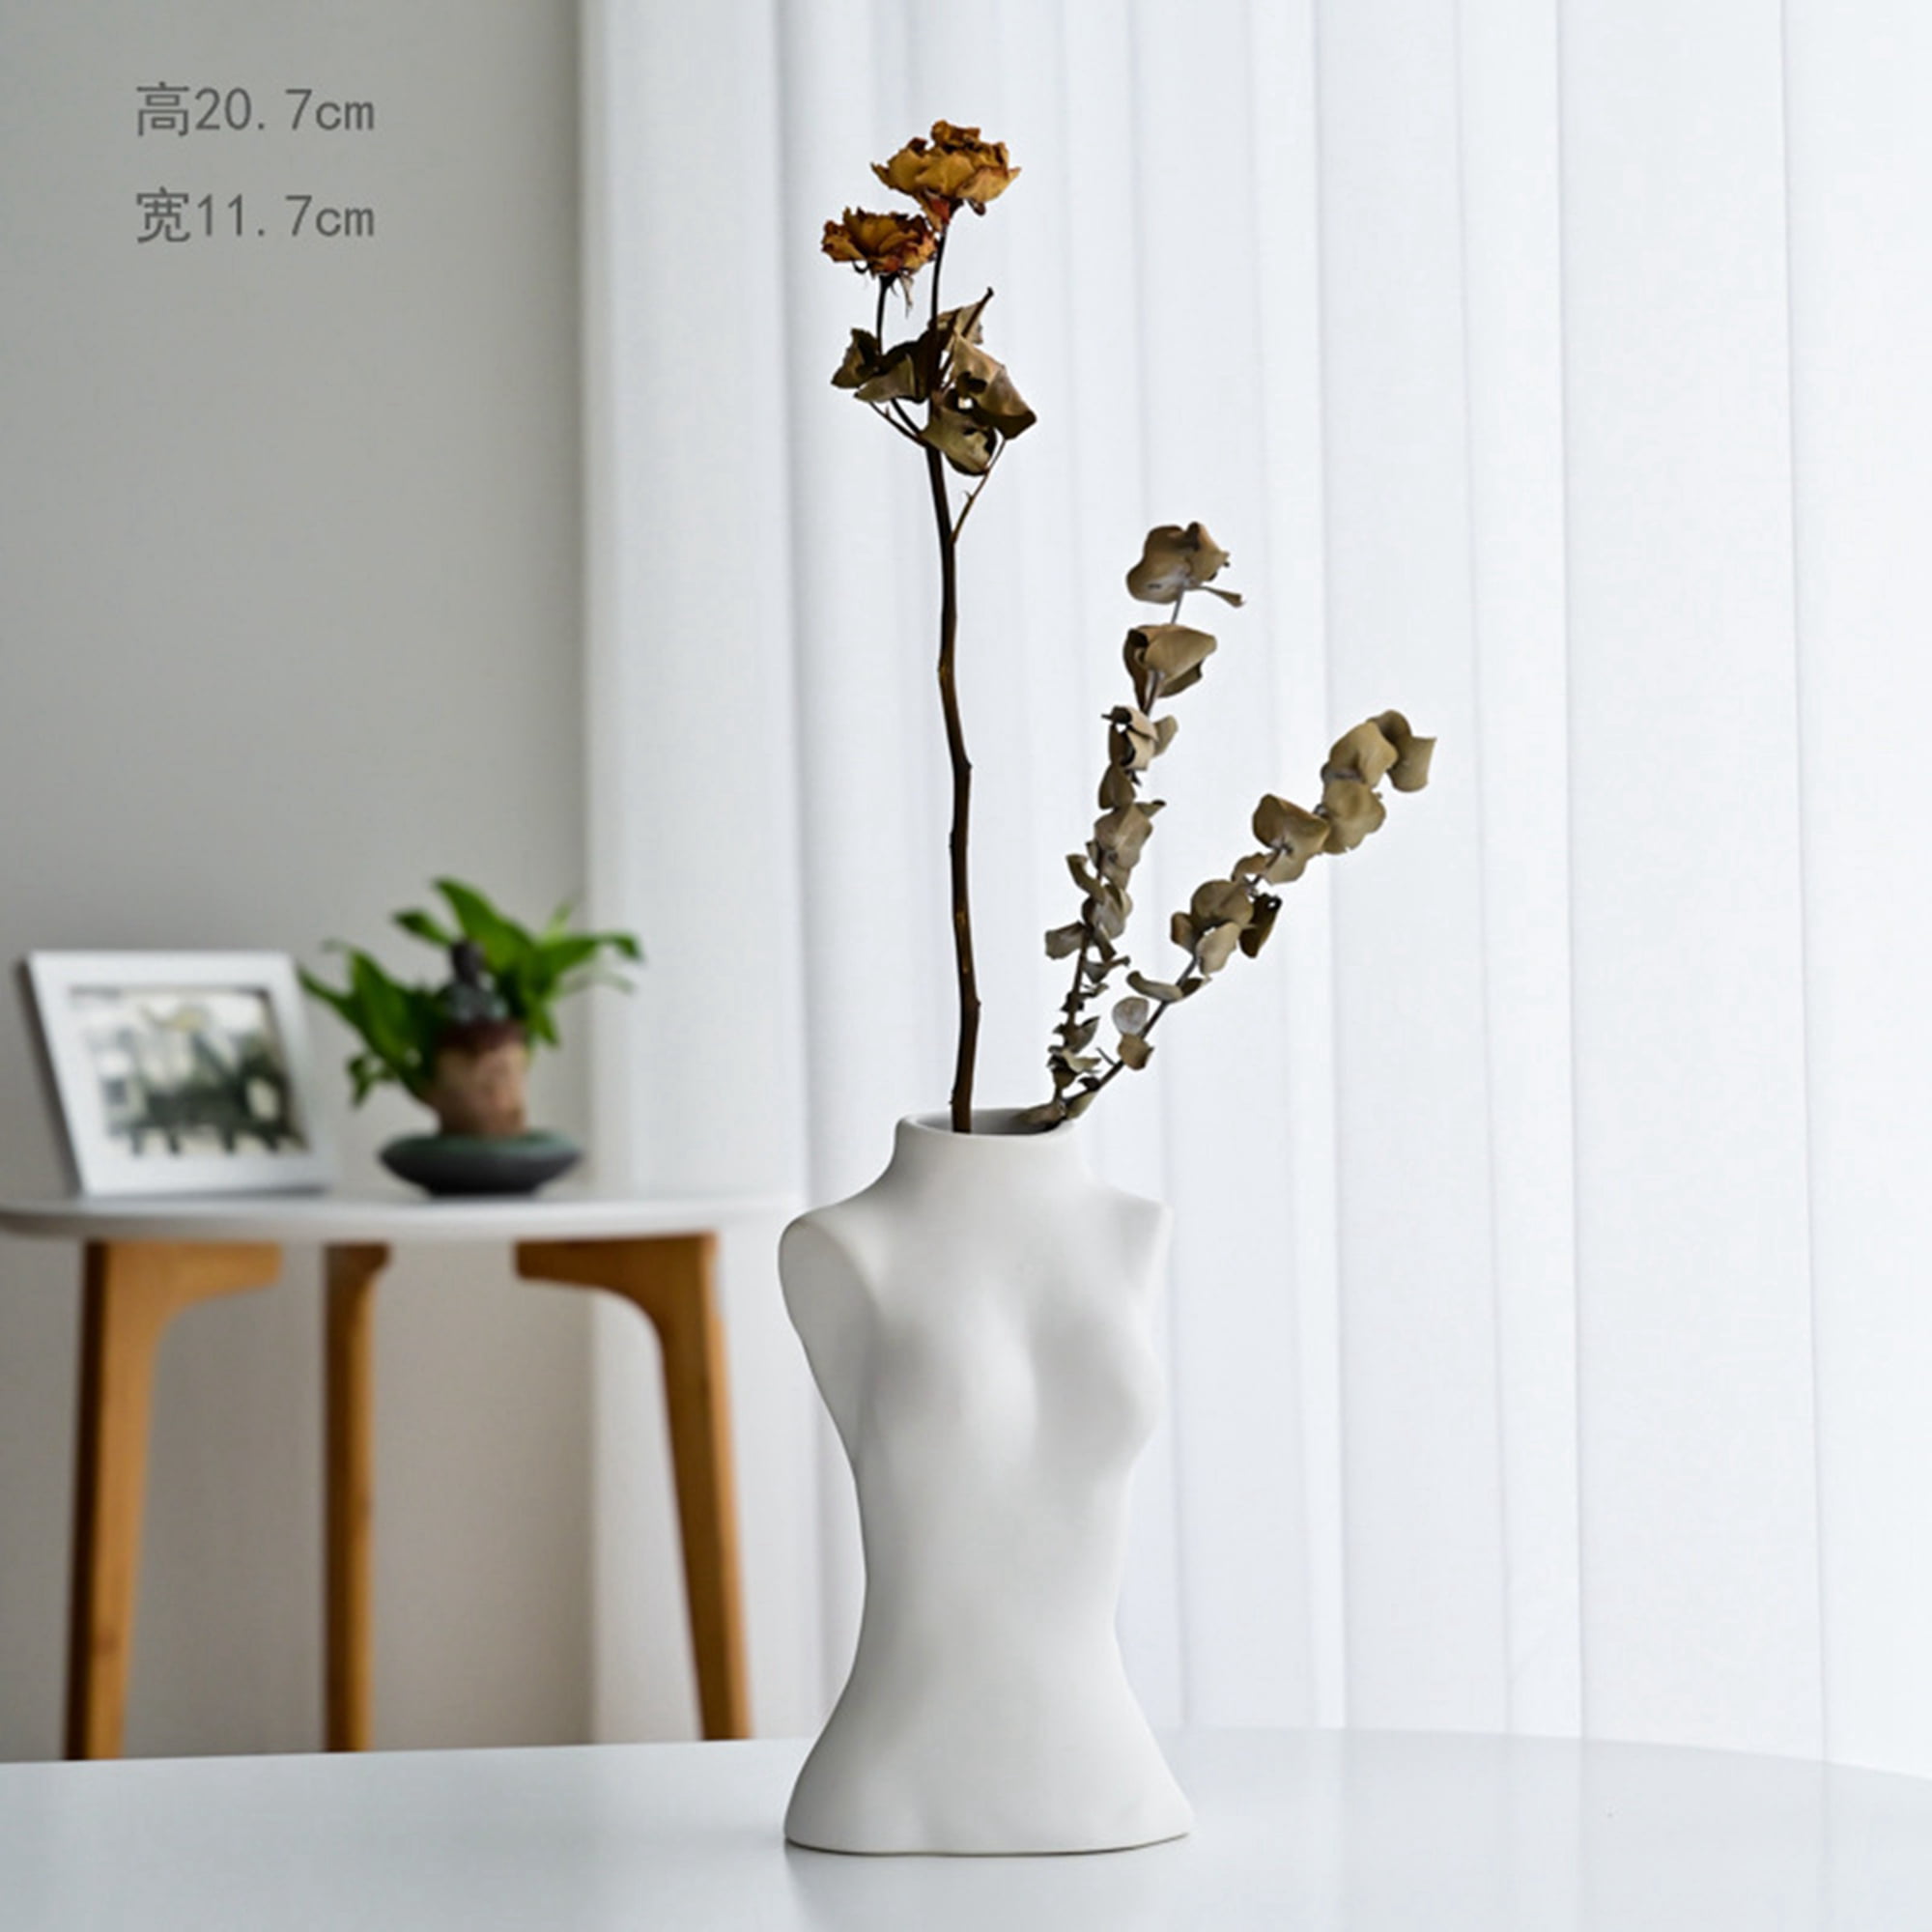 Flower Arrangement Creative Vase,Black Style Vase for Home Office Decoration Party and Gift Gelible Body Flower Vase Ceramic Minimalist Vase Decorative Flower Vase 